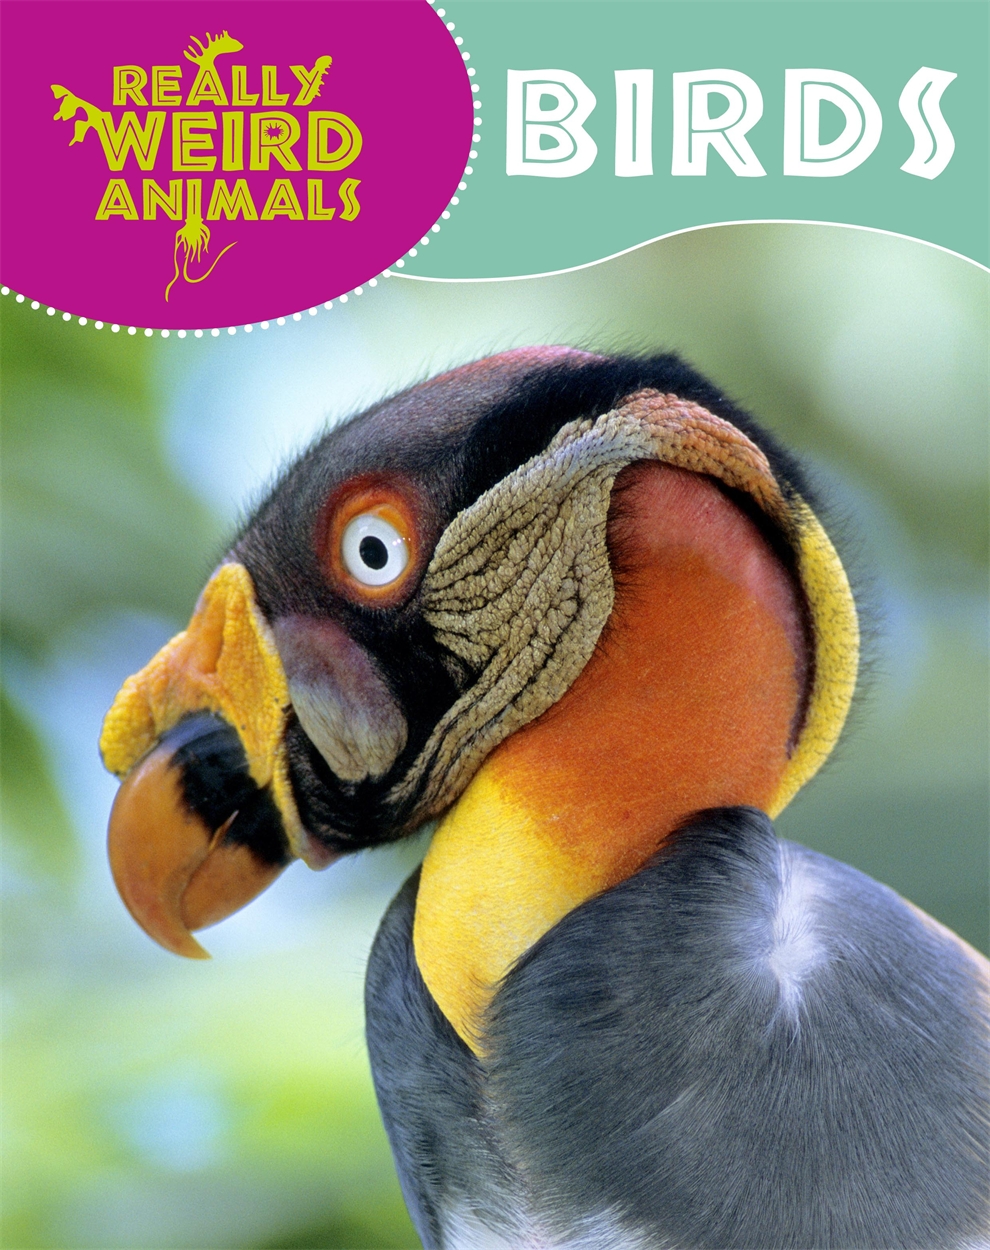 Really Weird Animals: Birds by Clare Hibbert | Hachette UK